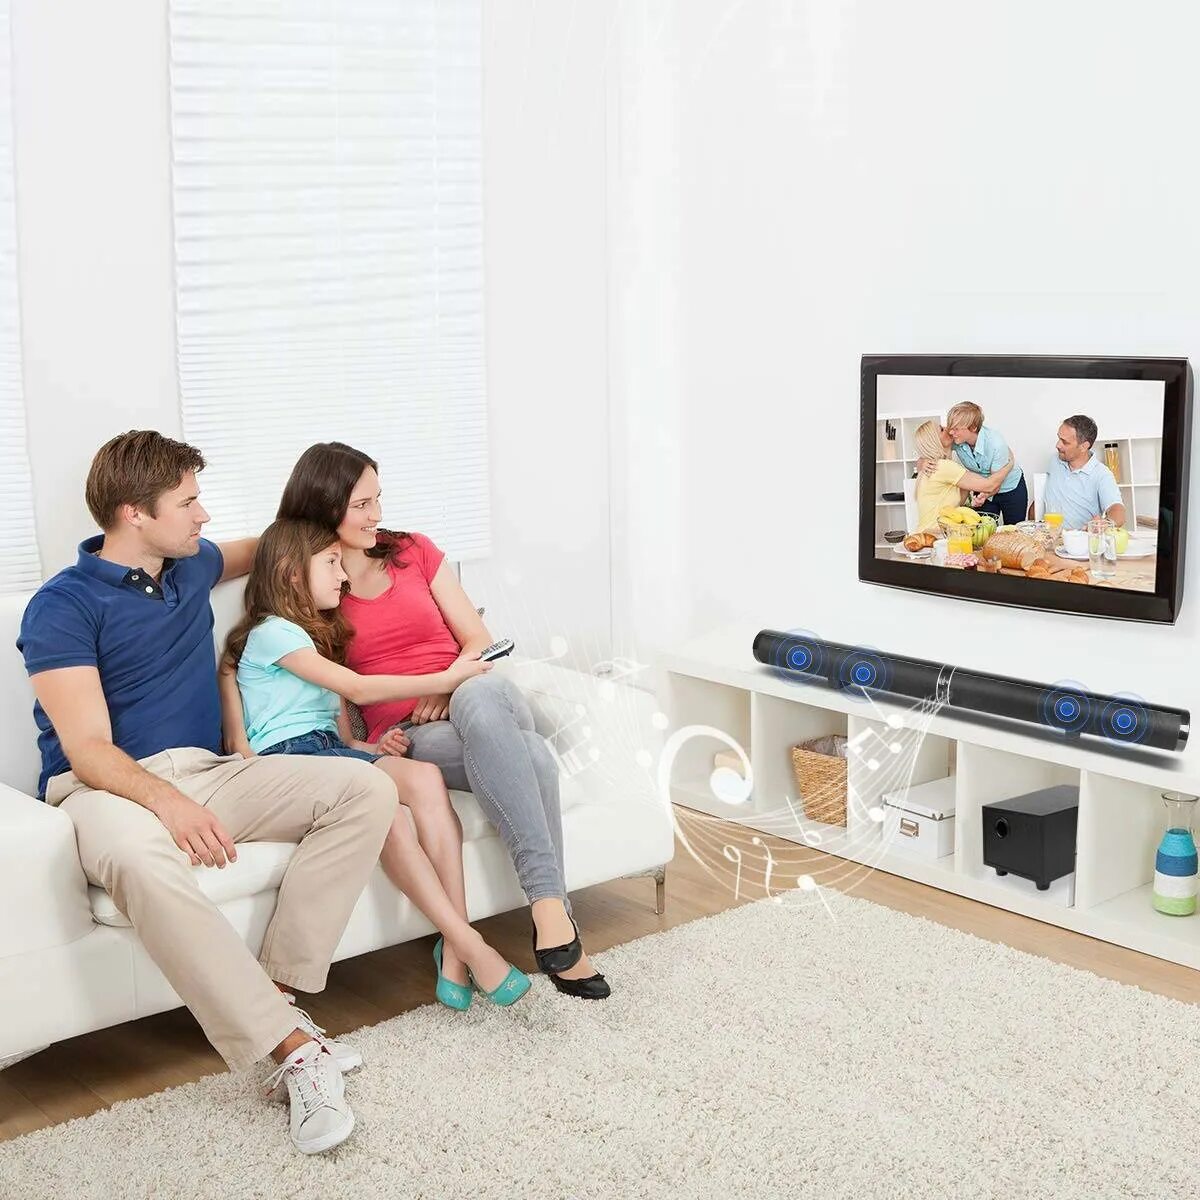 Диван перед телевизором. Семья у телевизора. Семья перед Телеком. Семья на диване перед телевизором. Семья смотрит телевизор.